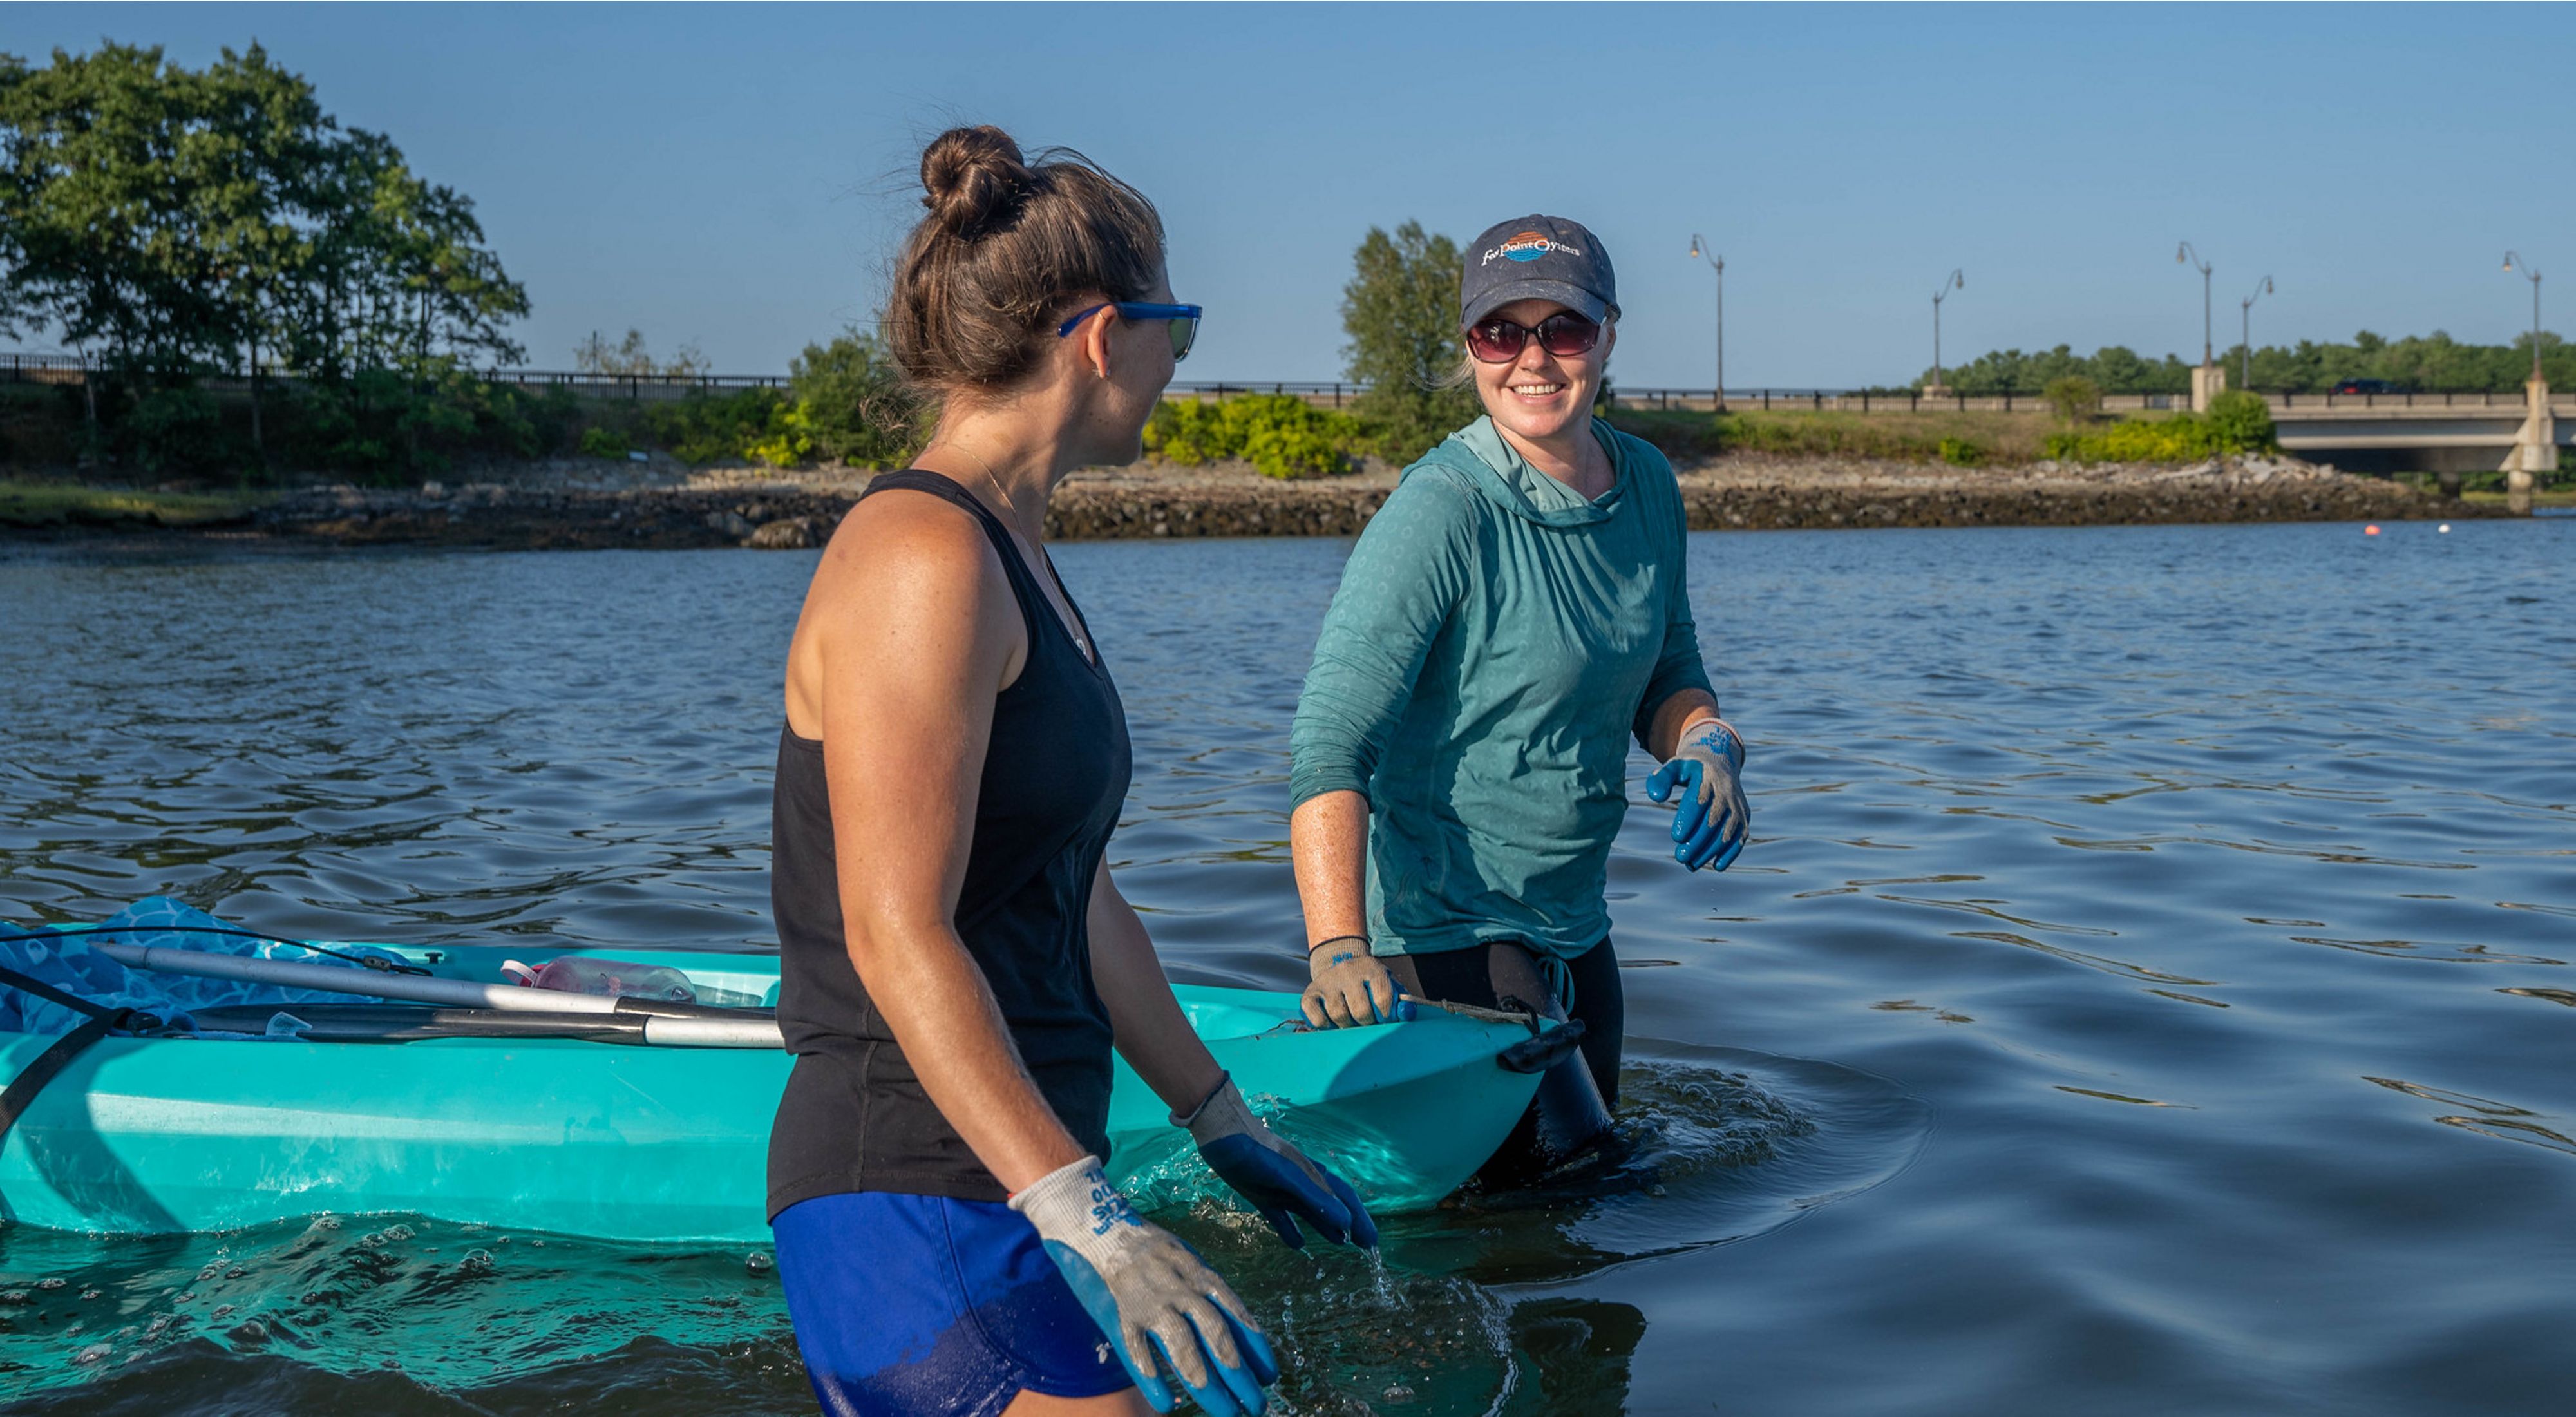 Two women wade through thigh-deep water, pulling a kayak between them.